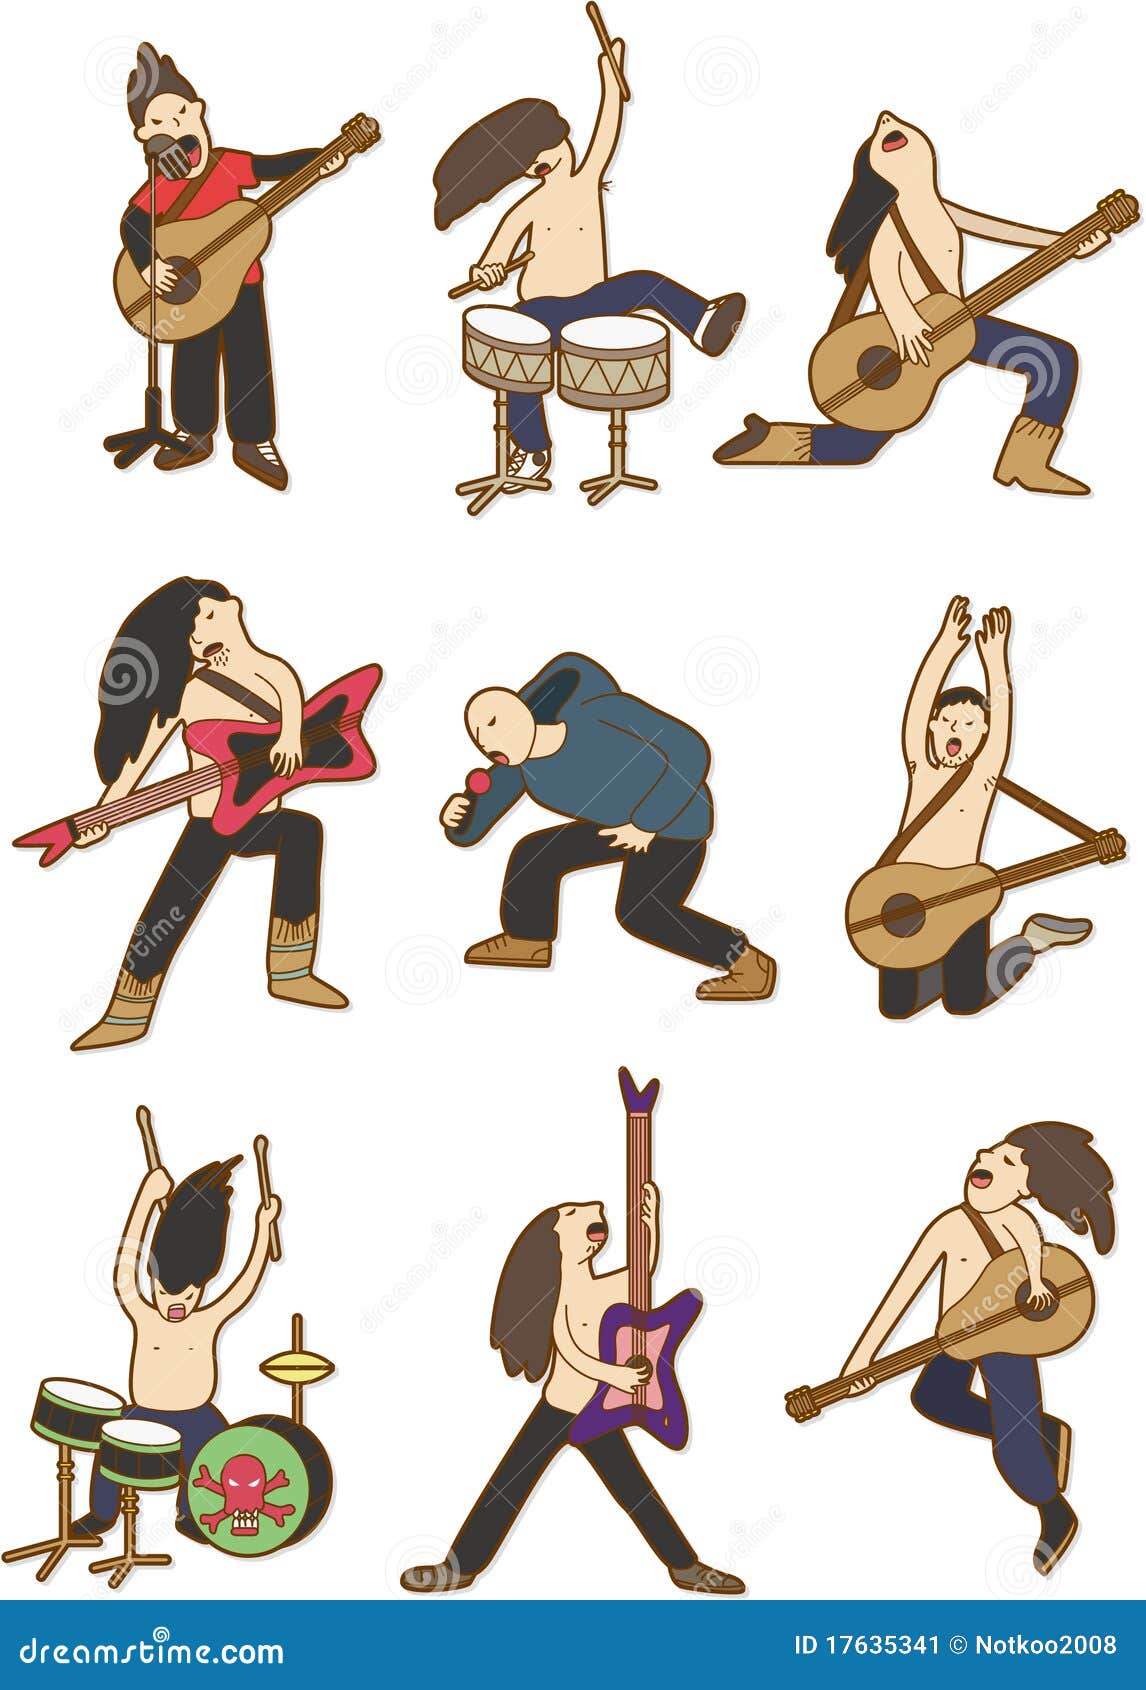 Cartoon Rock Music Band Icon Stock Image - Image: 17635341